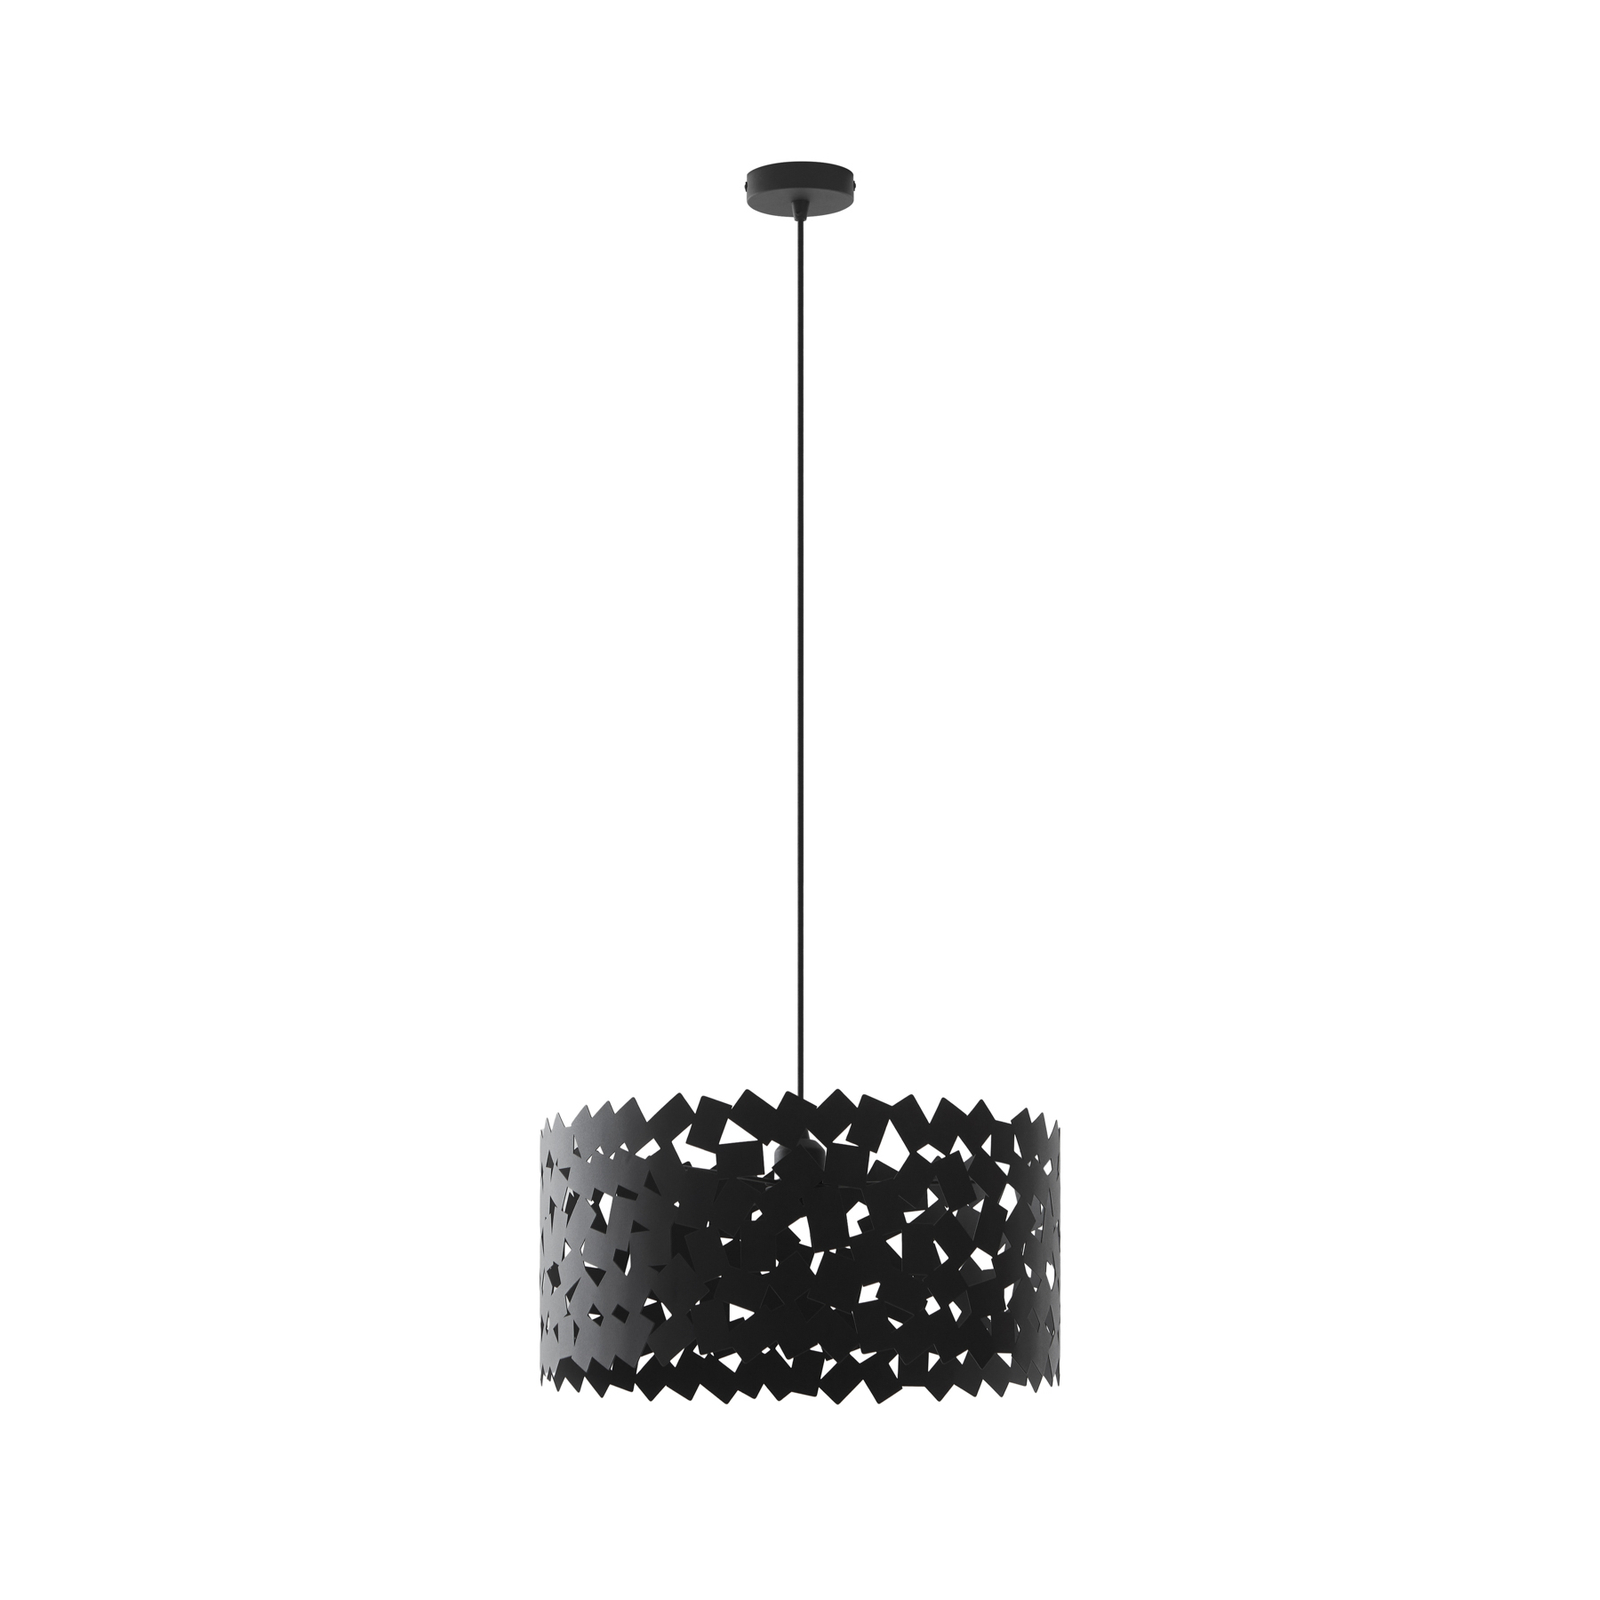 Lucande hanglamp Aeloria, zwart, Ø 45 cm, ijzer, E27